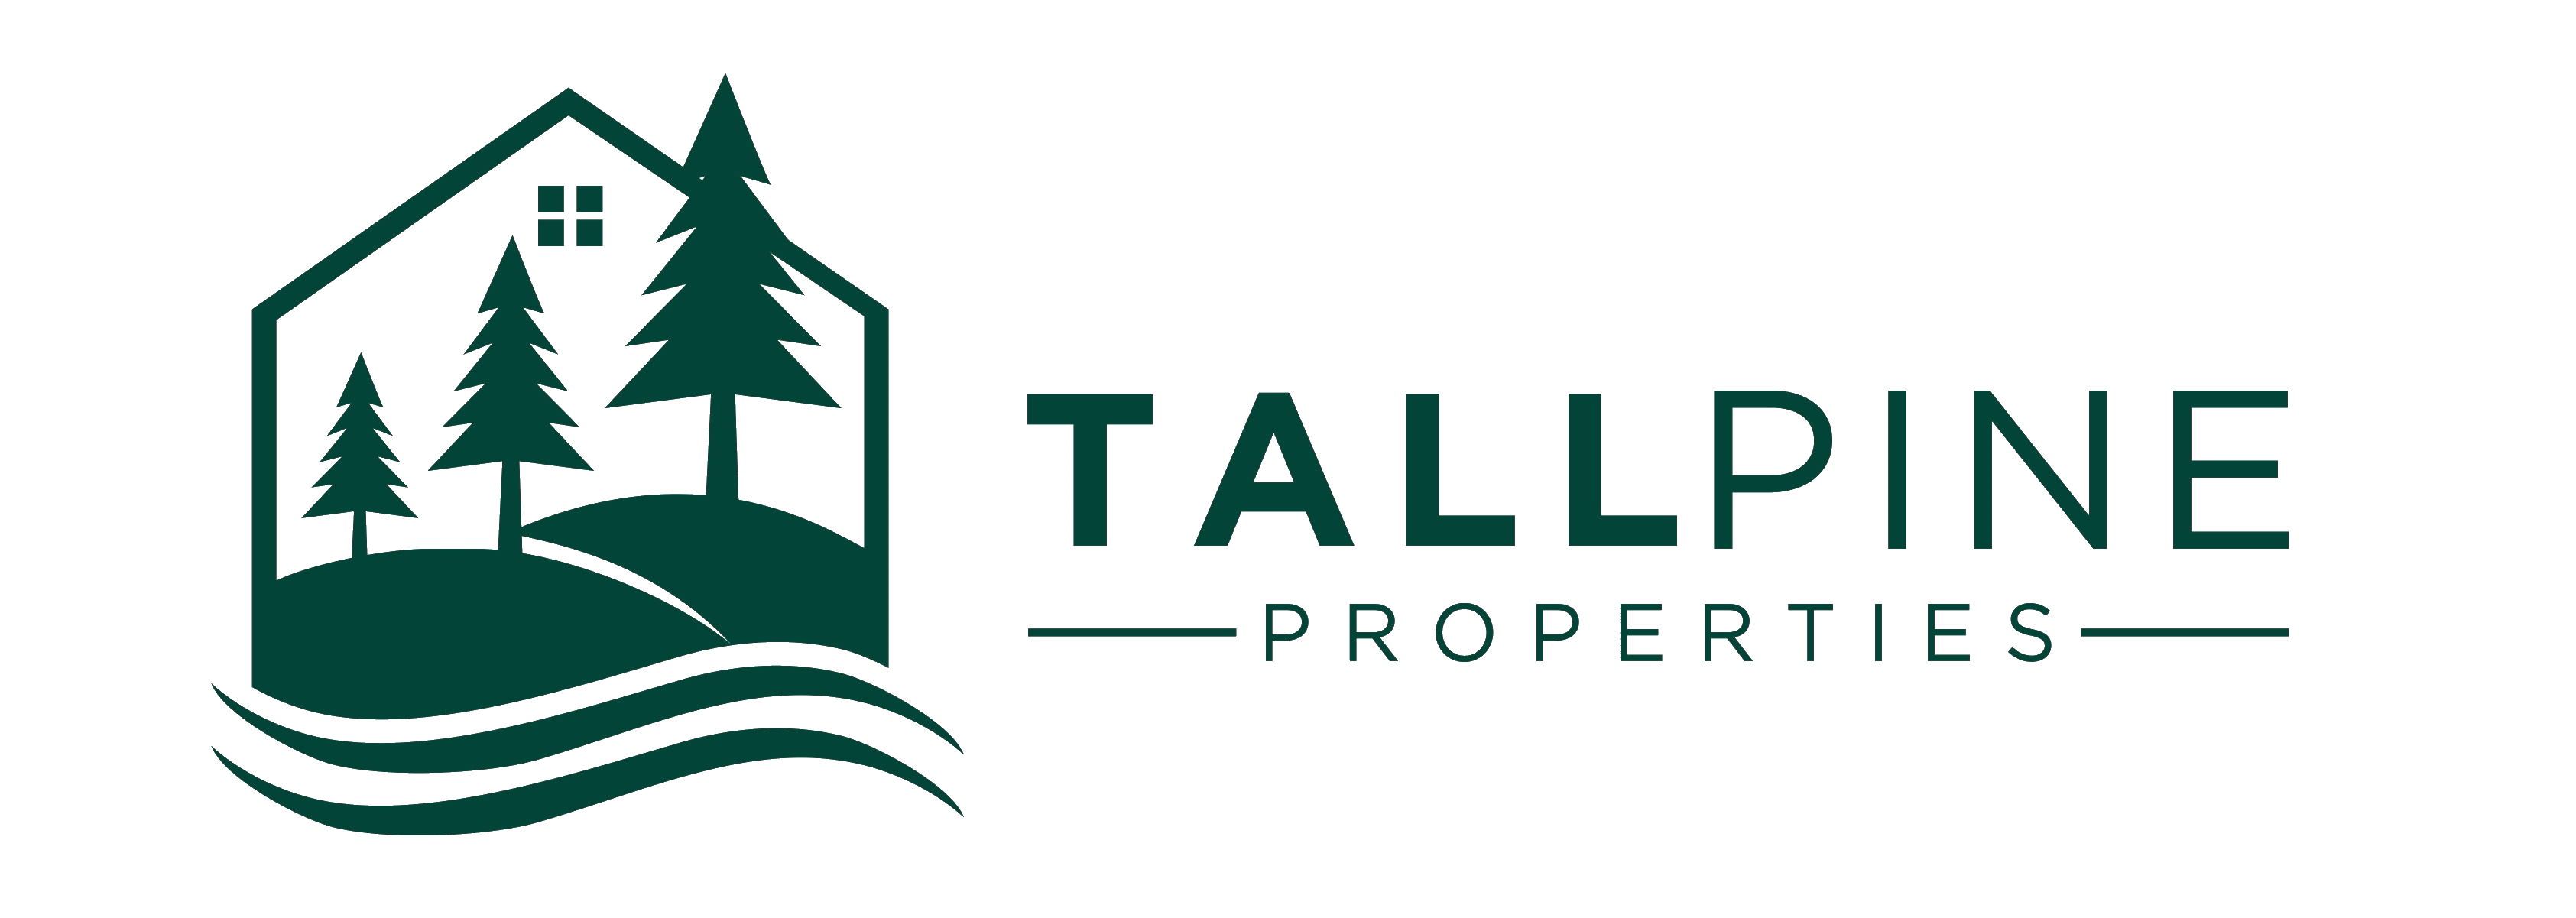 Tall Pine Properties logo